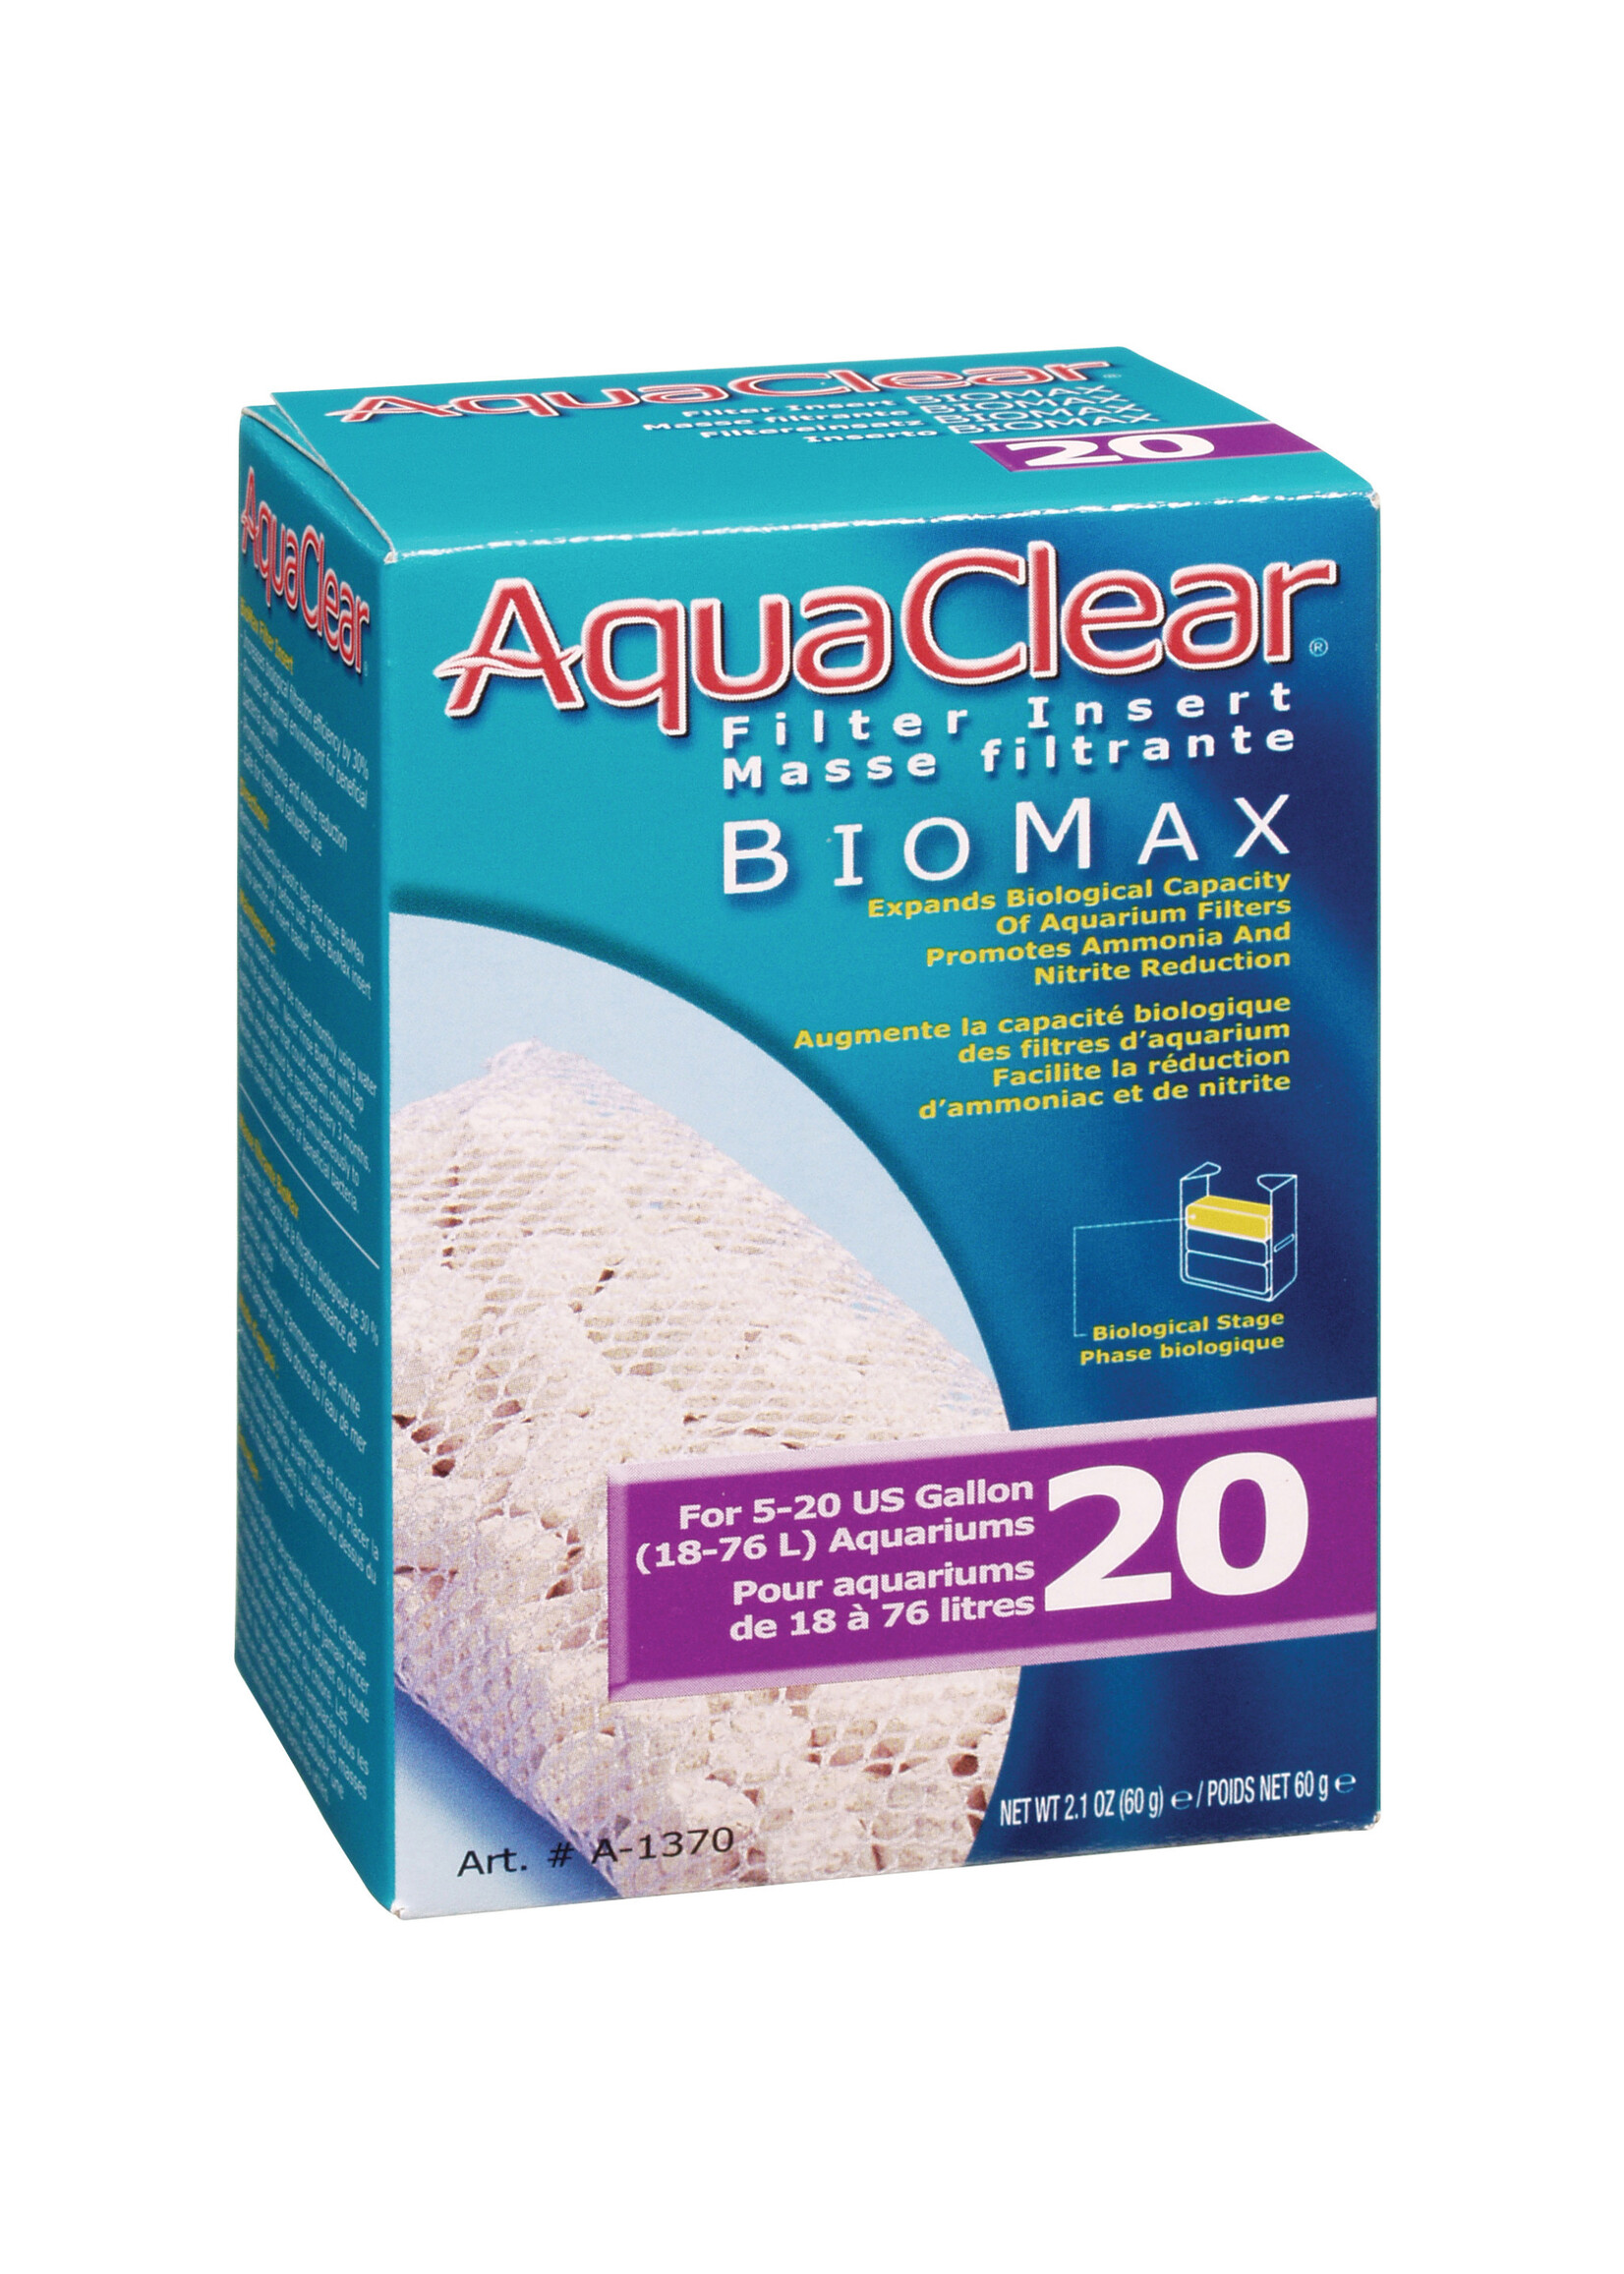 AquaClear 20 BIOMAX